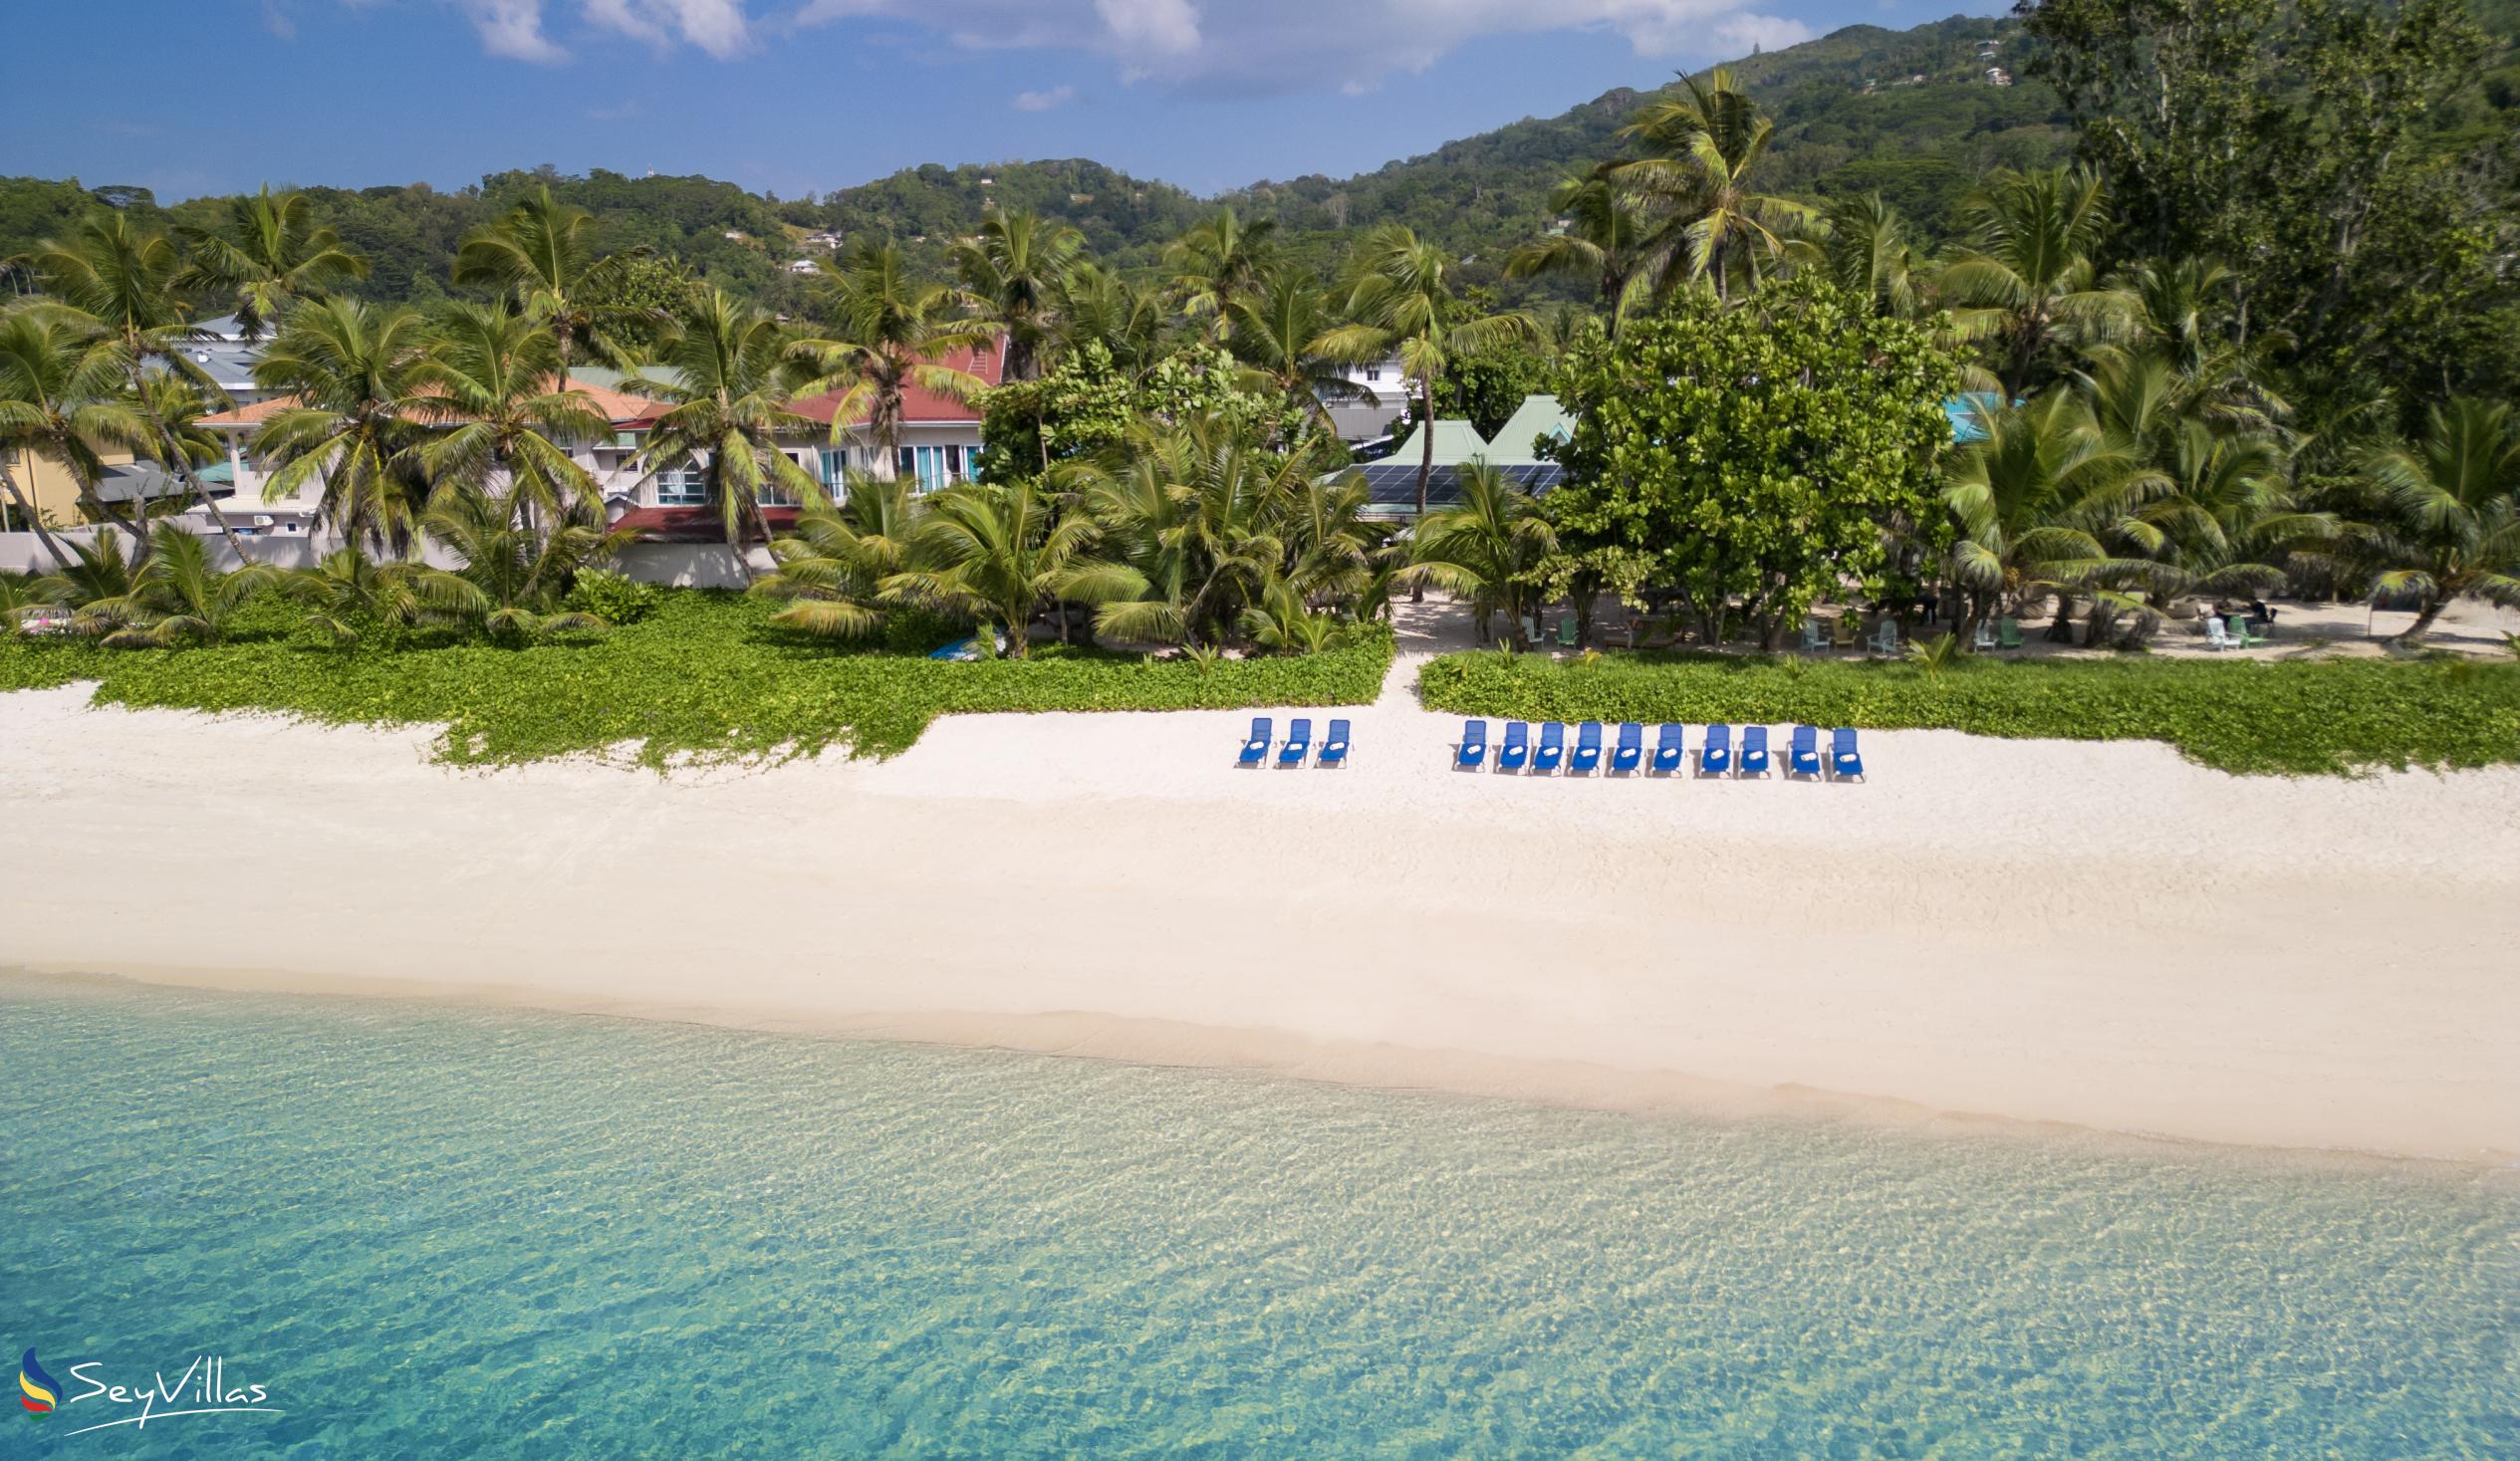 Foto 27: laila Resort - Posizione - Mahé (Seychelles)